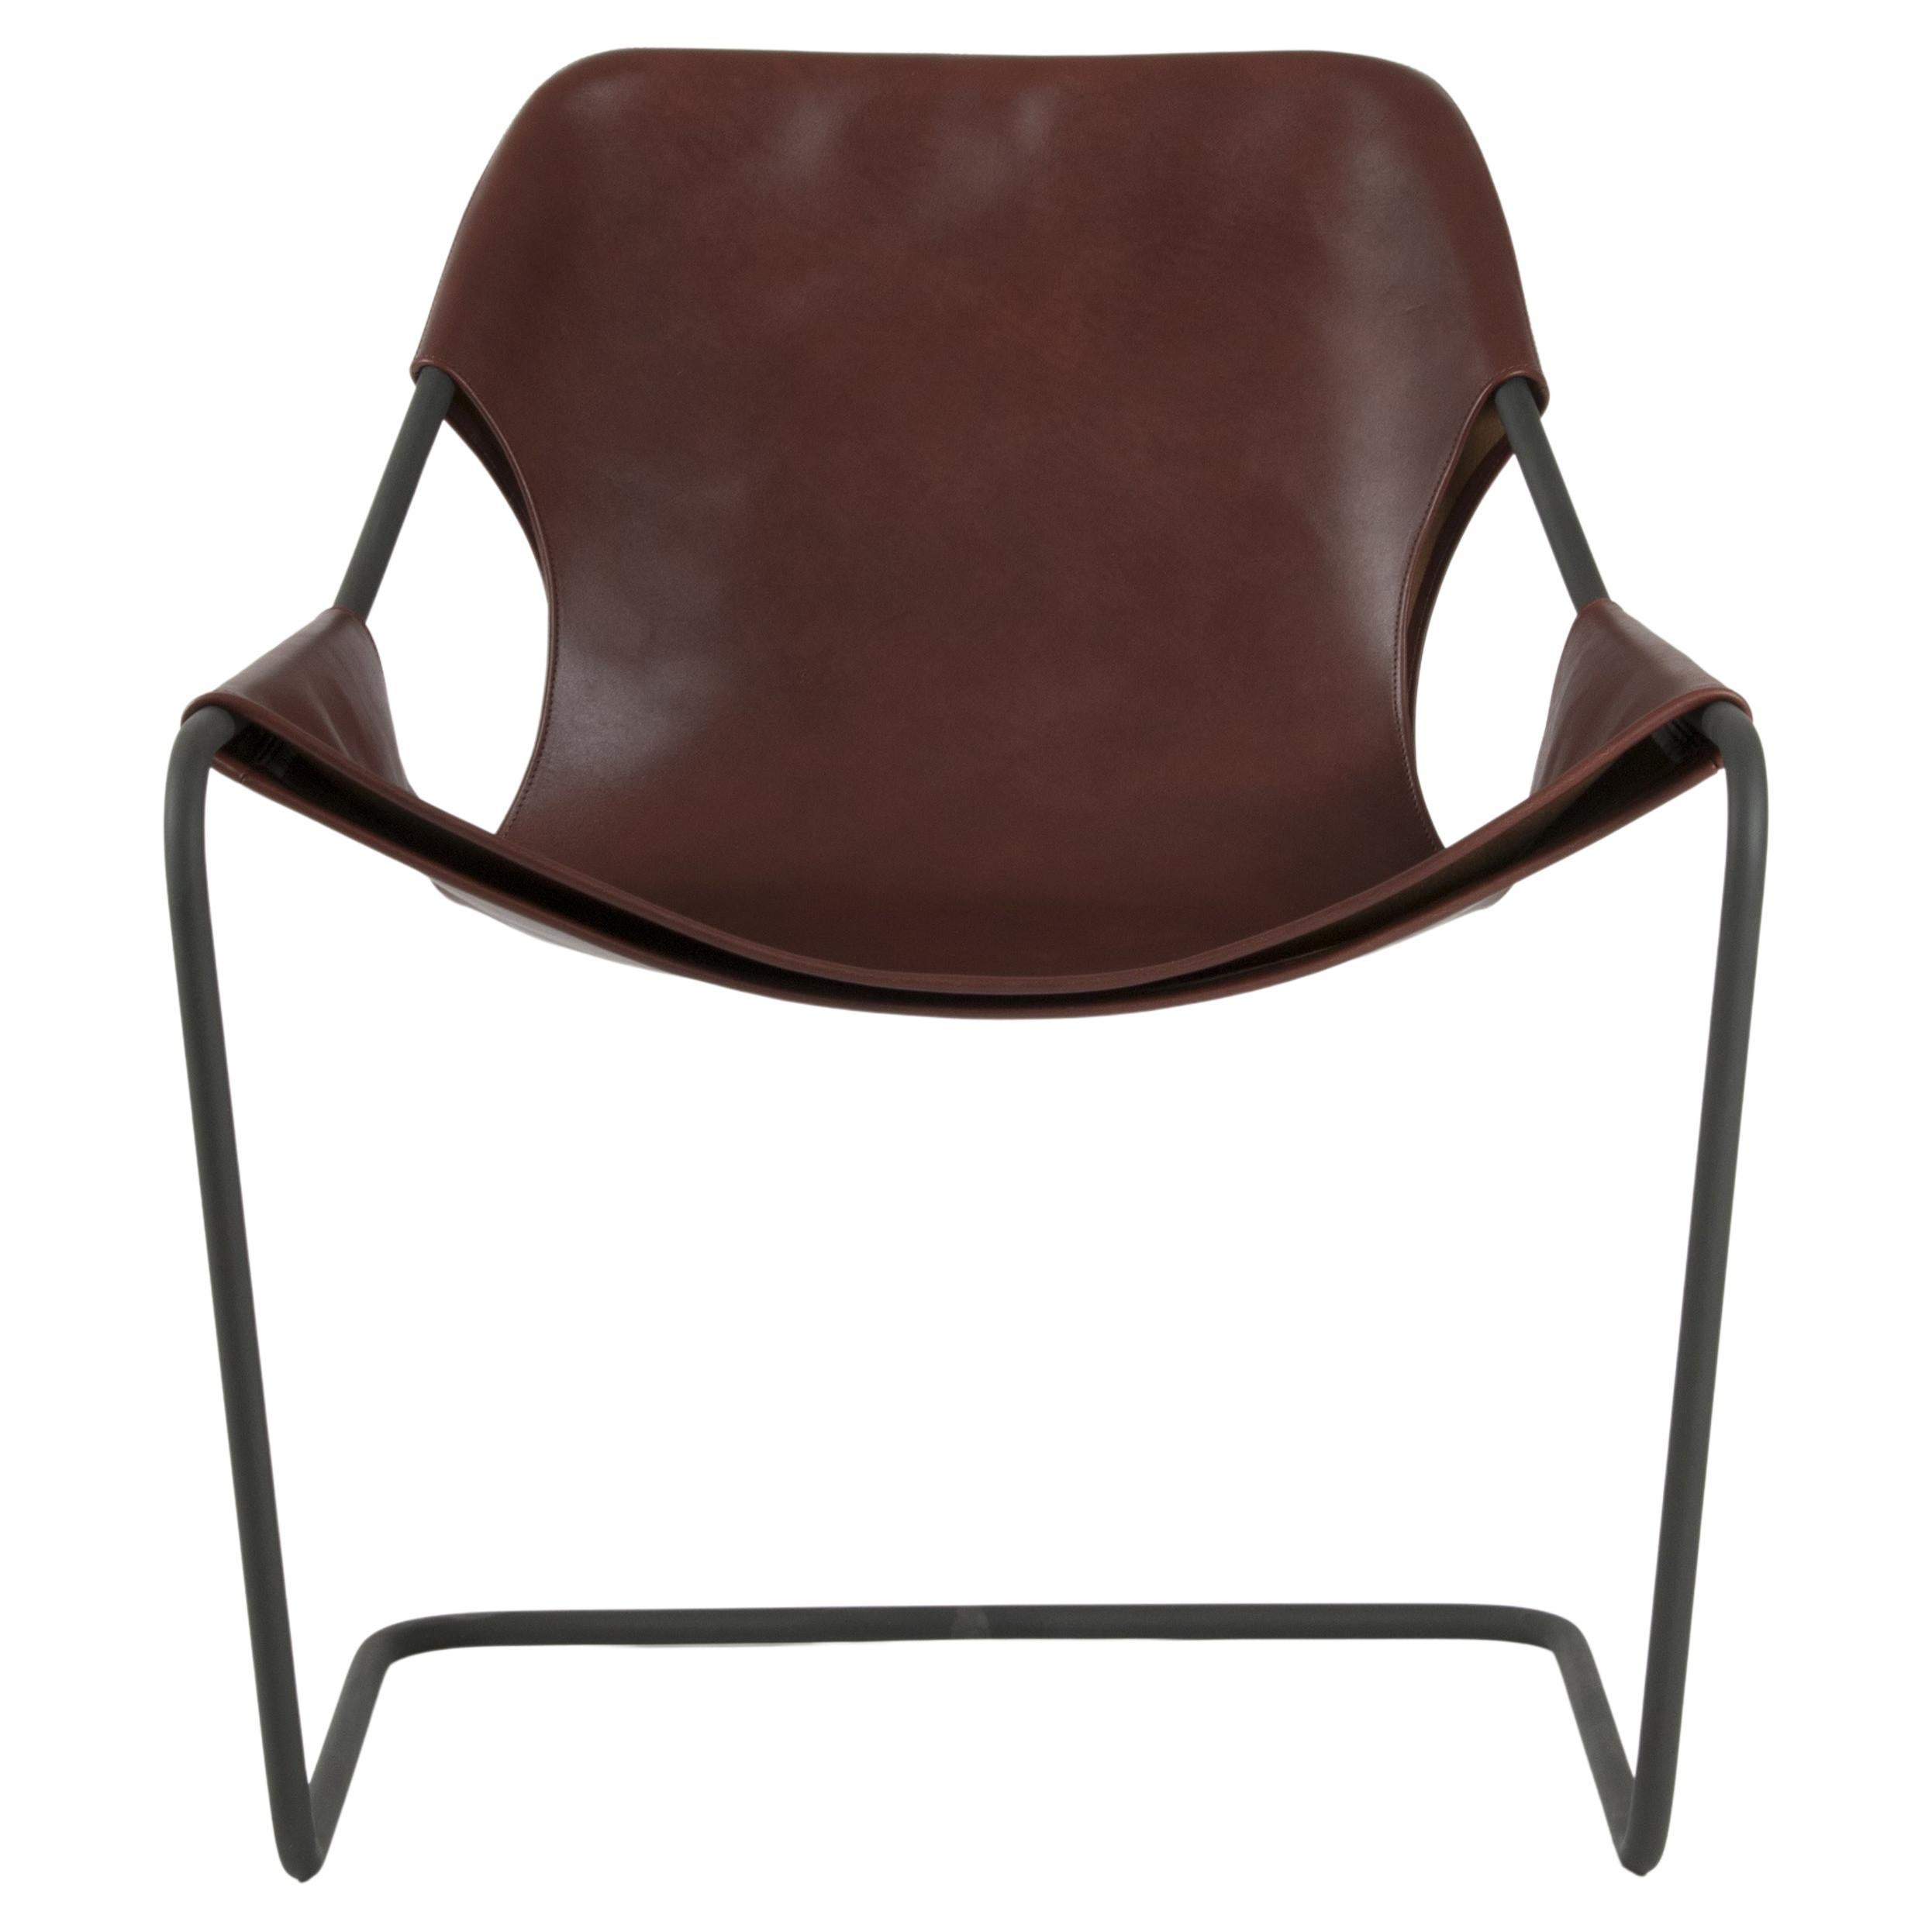 Paulistano Leather Chair by Objekto